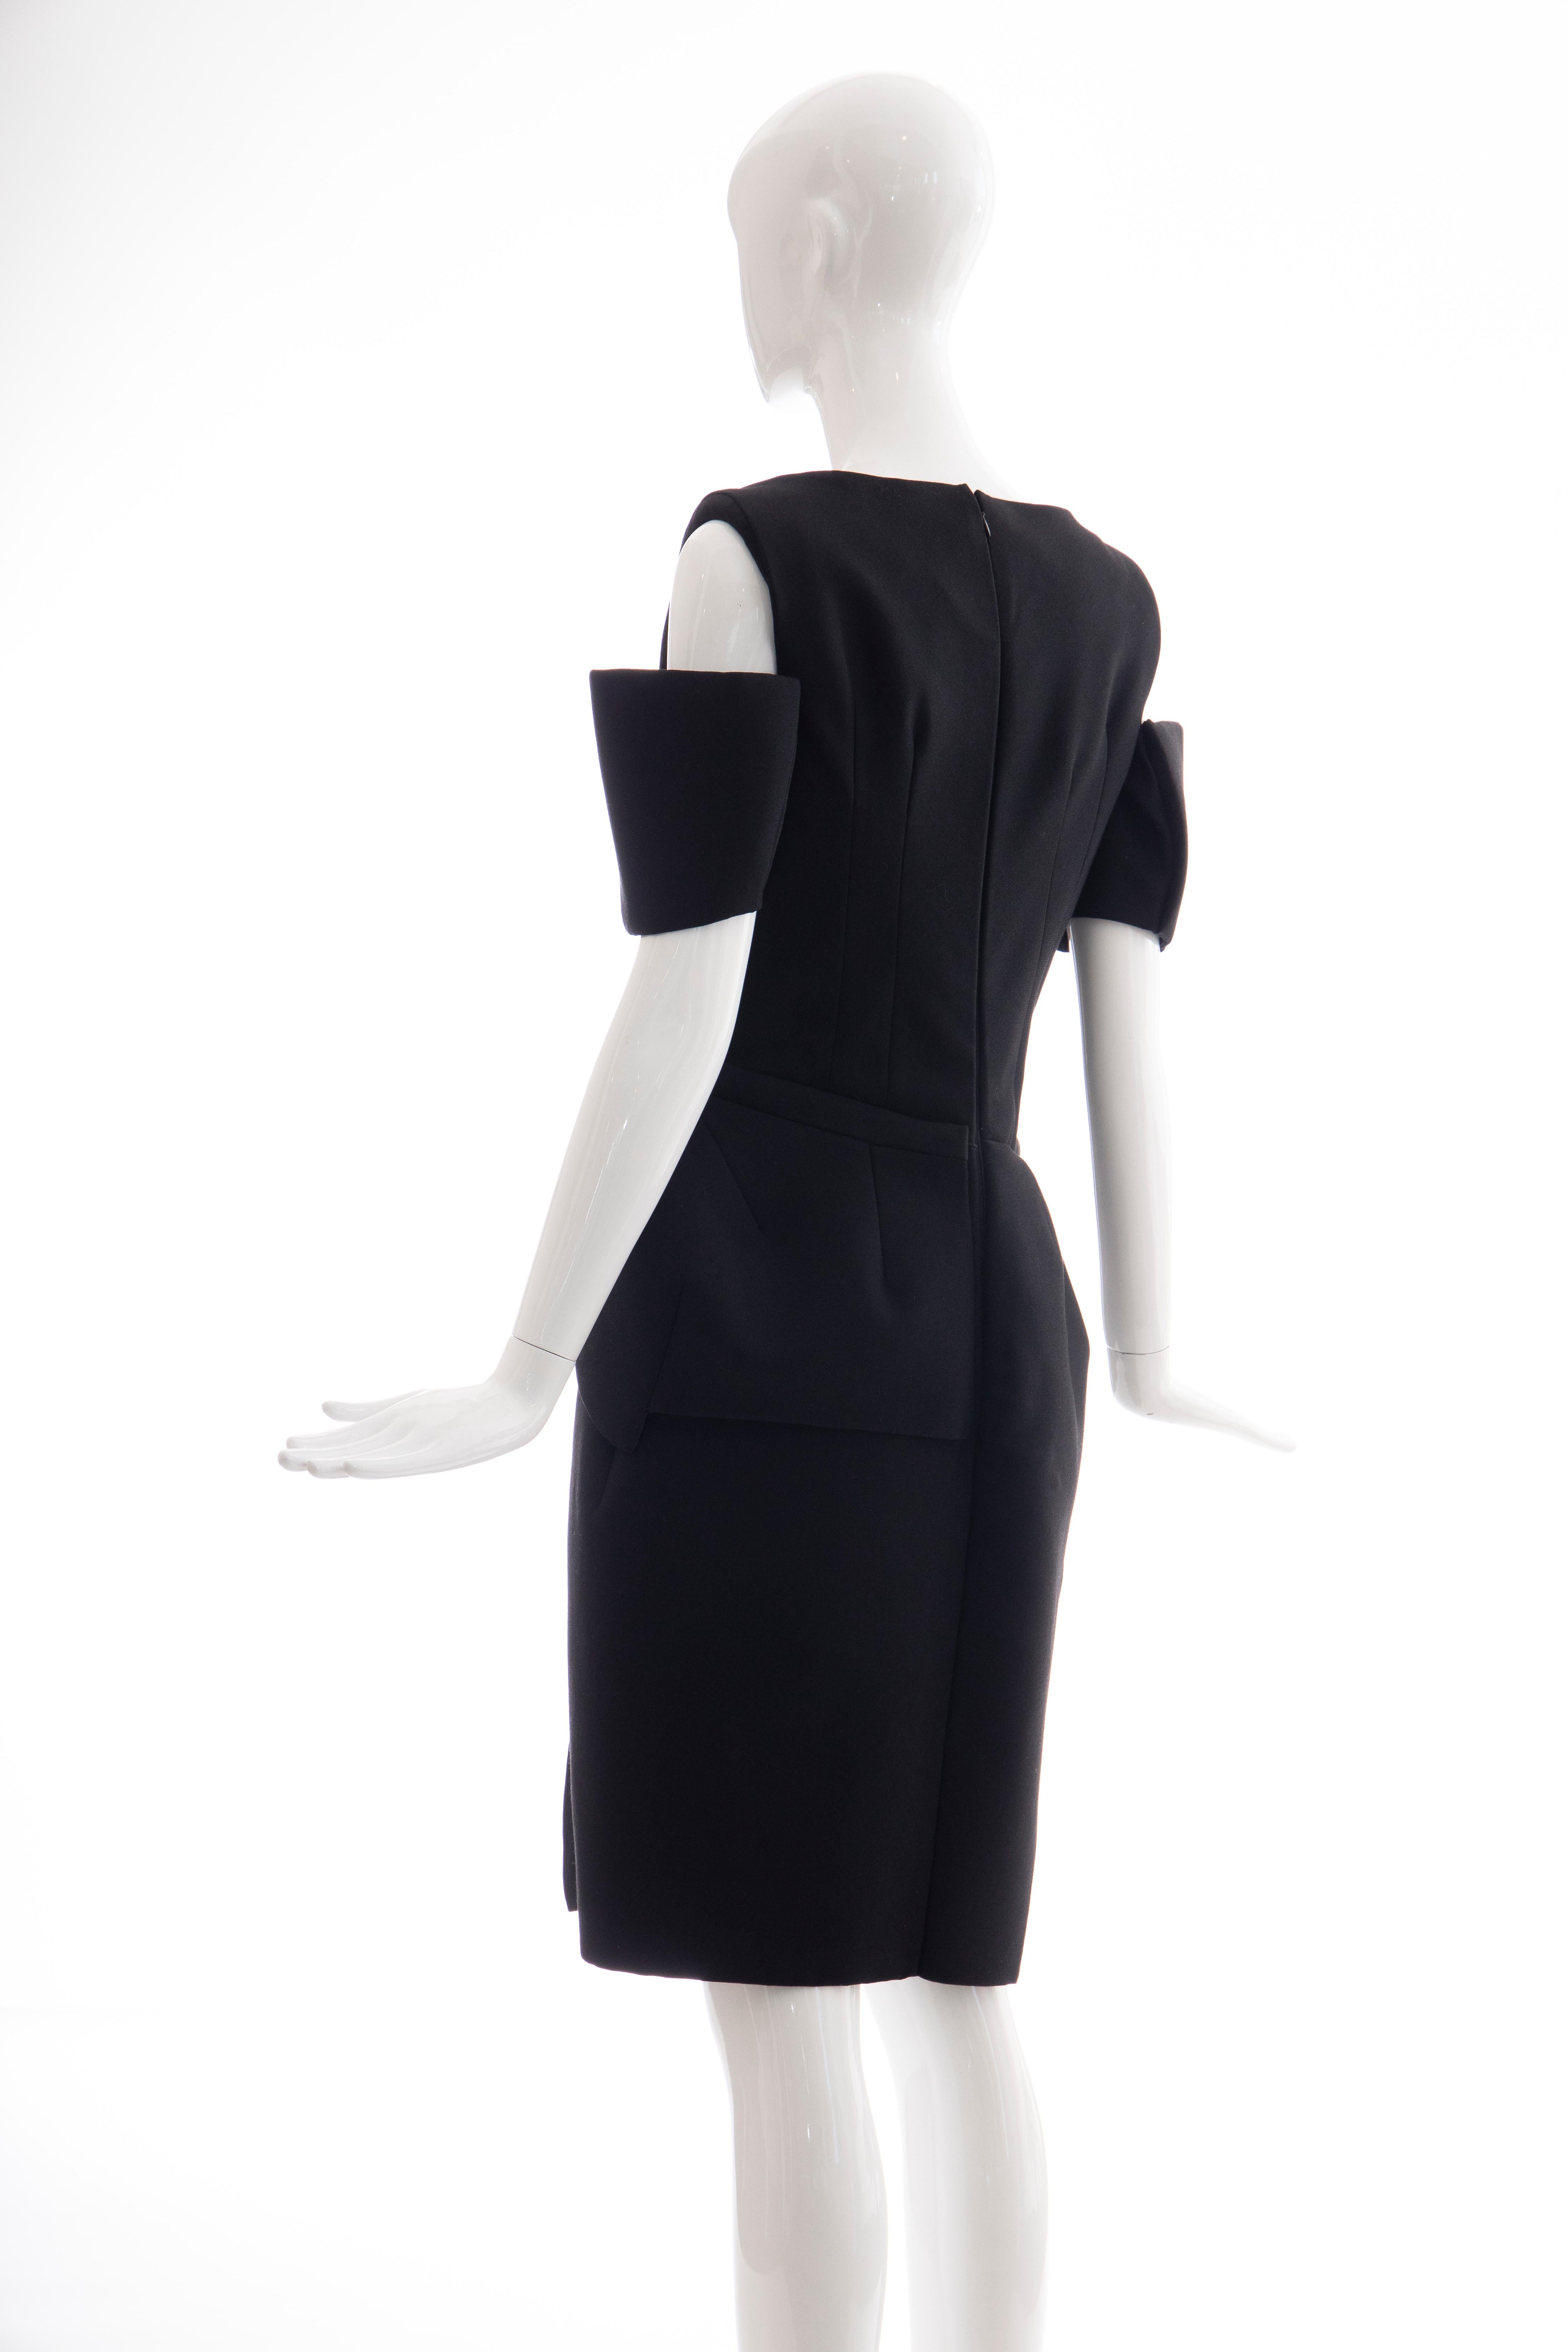 Nicolas Ghesquière for Balenciaga Runway Black Wool Structured Dress, Fall 2008 For Sale 1